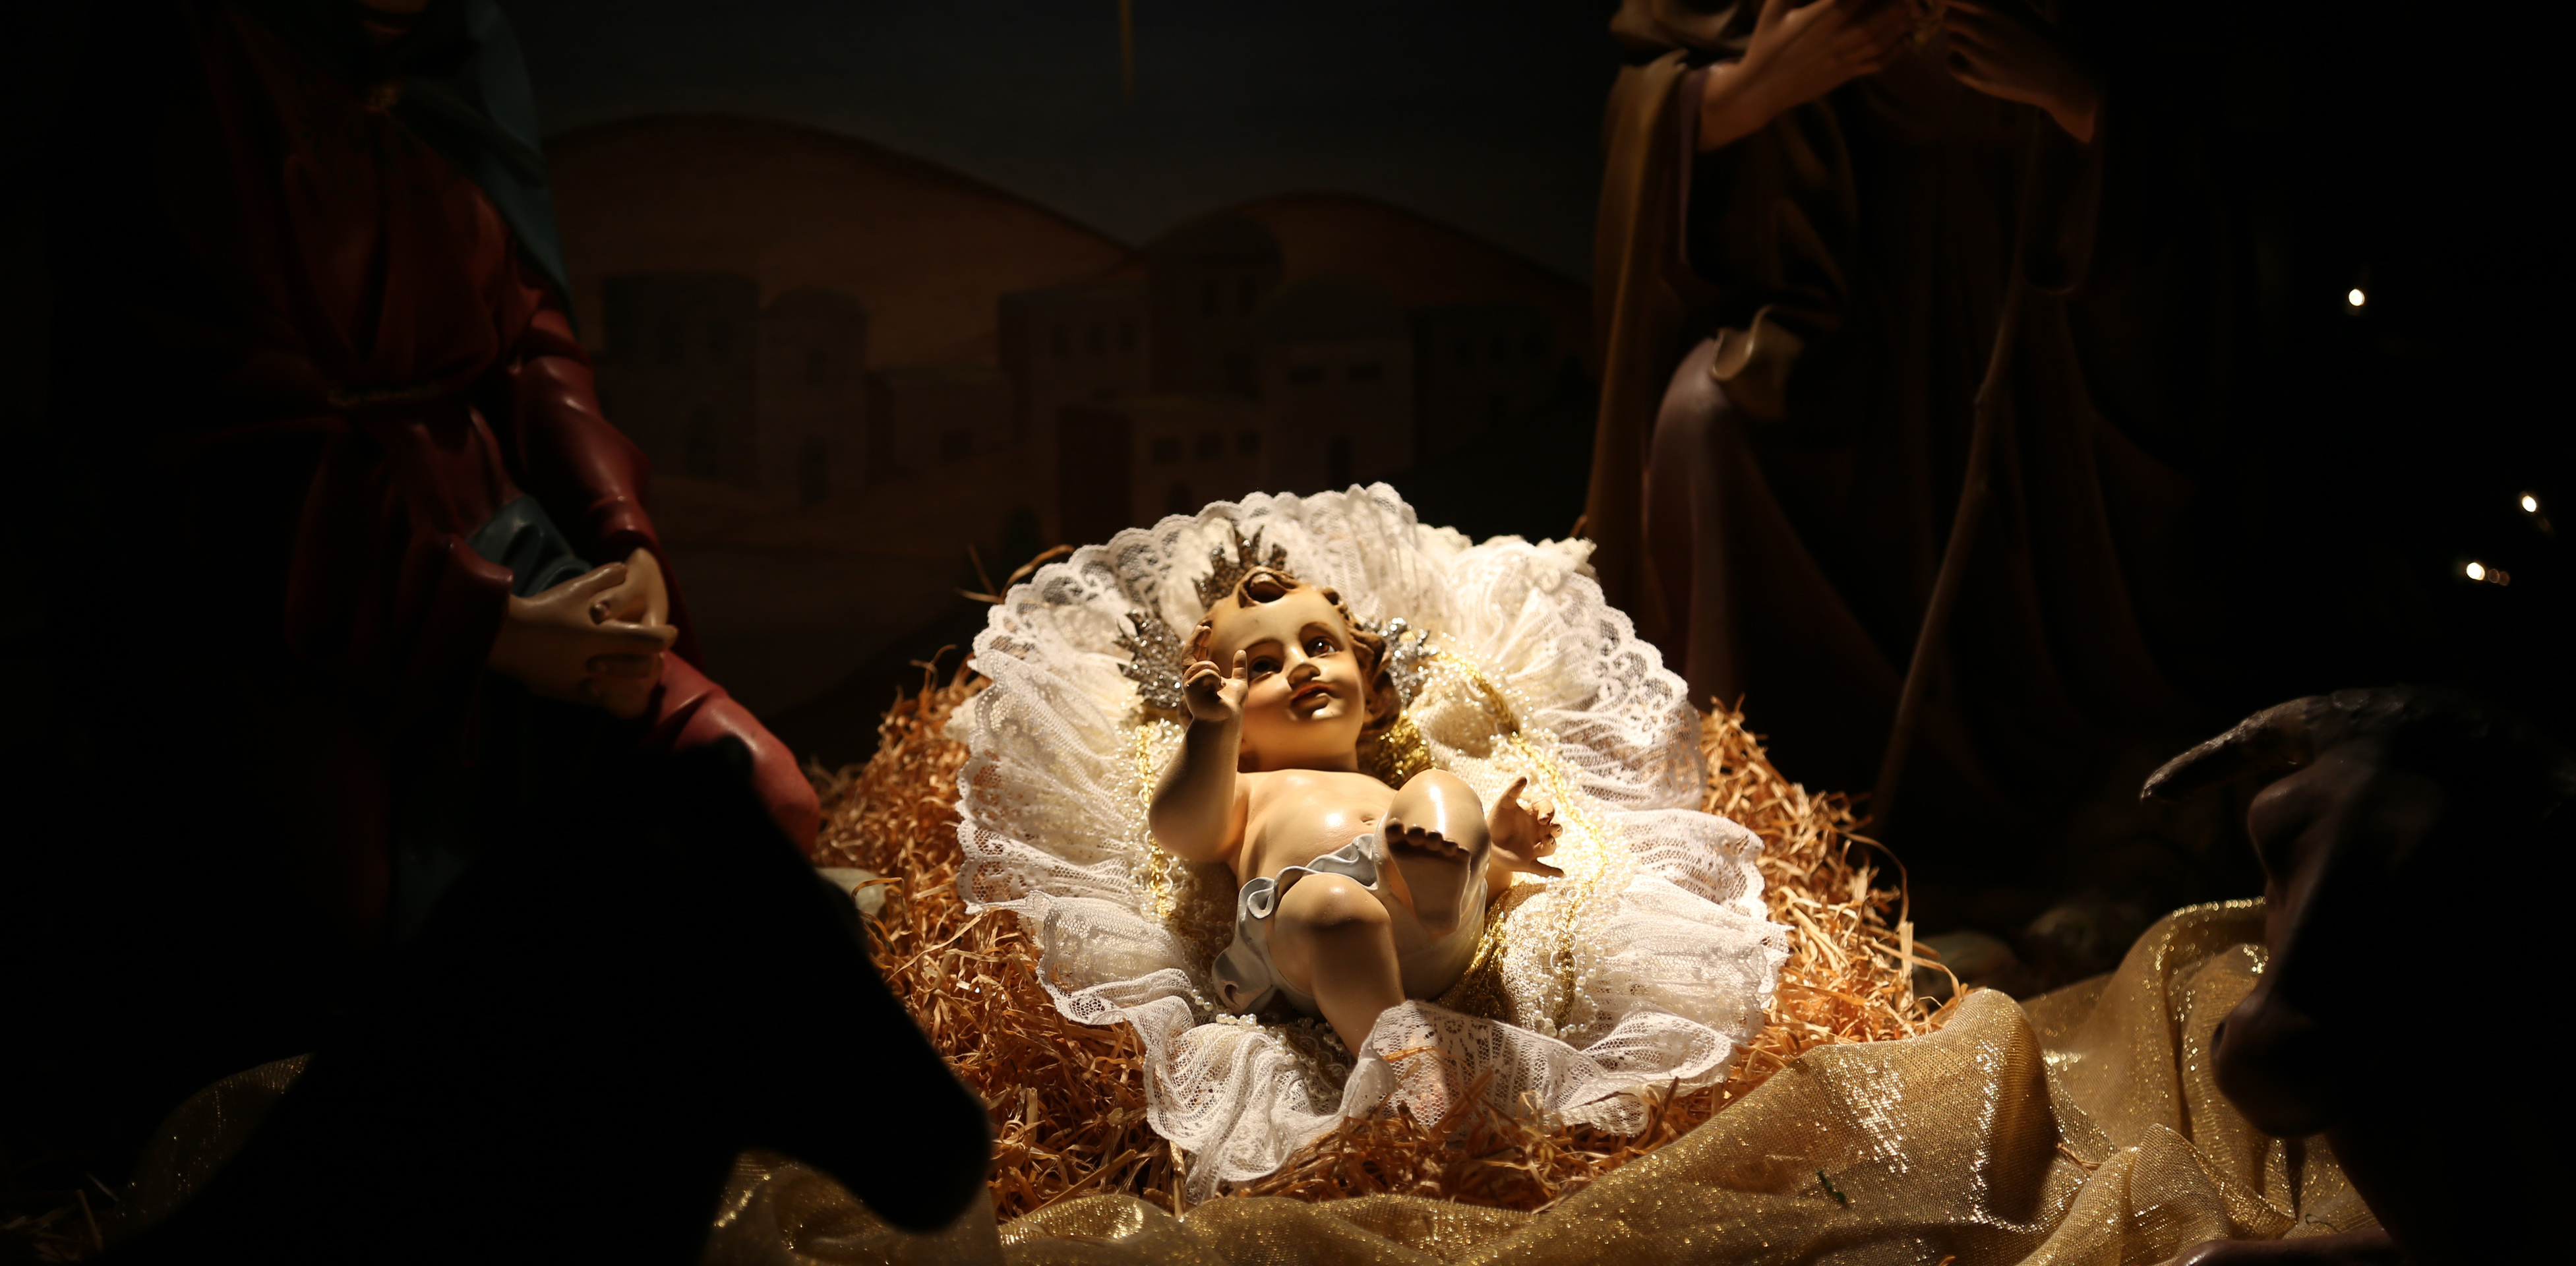 Statue of Baby Jesus in manger